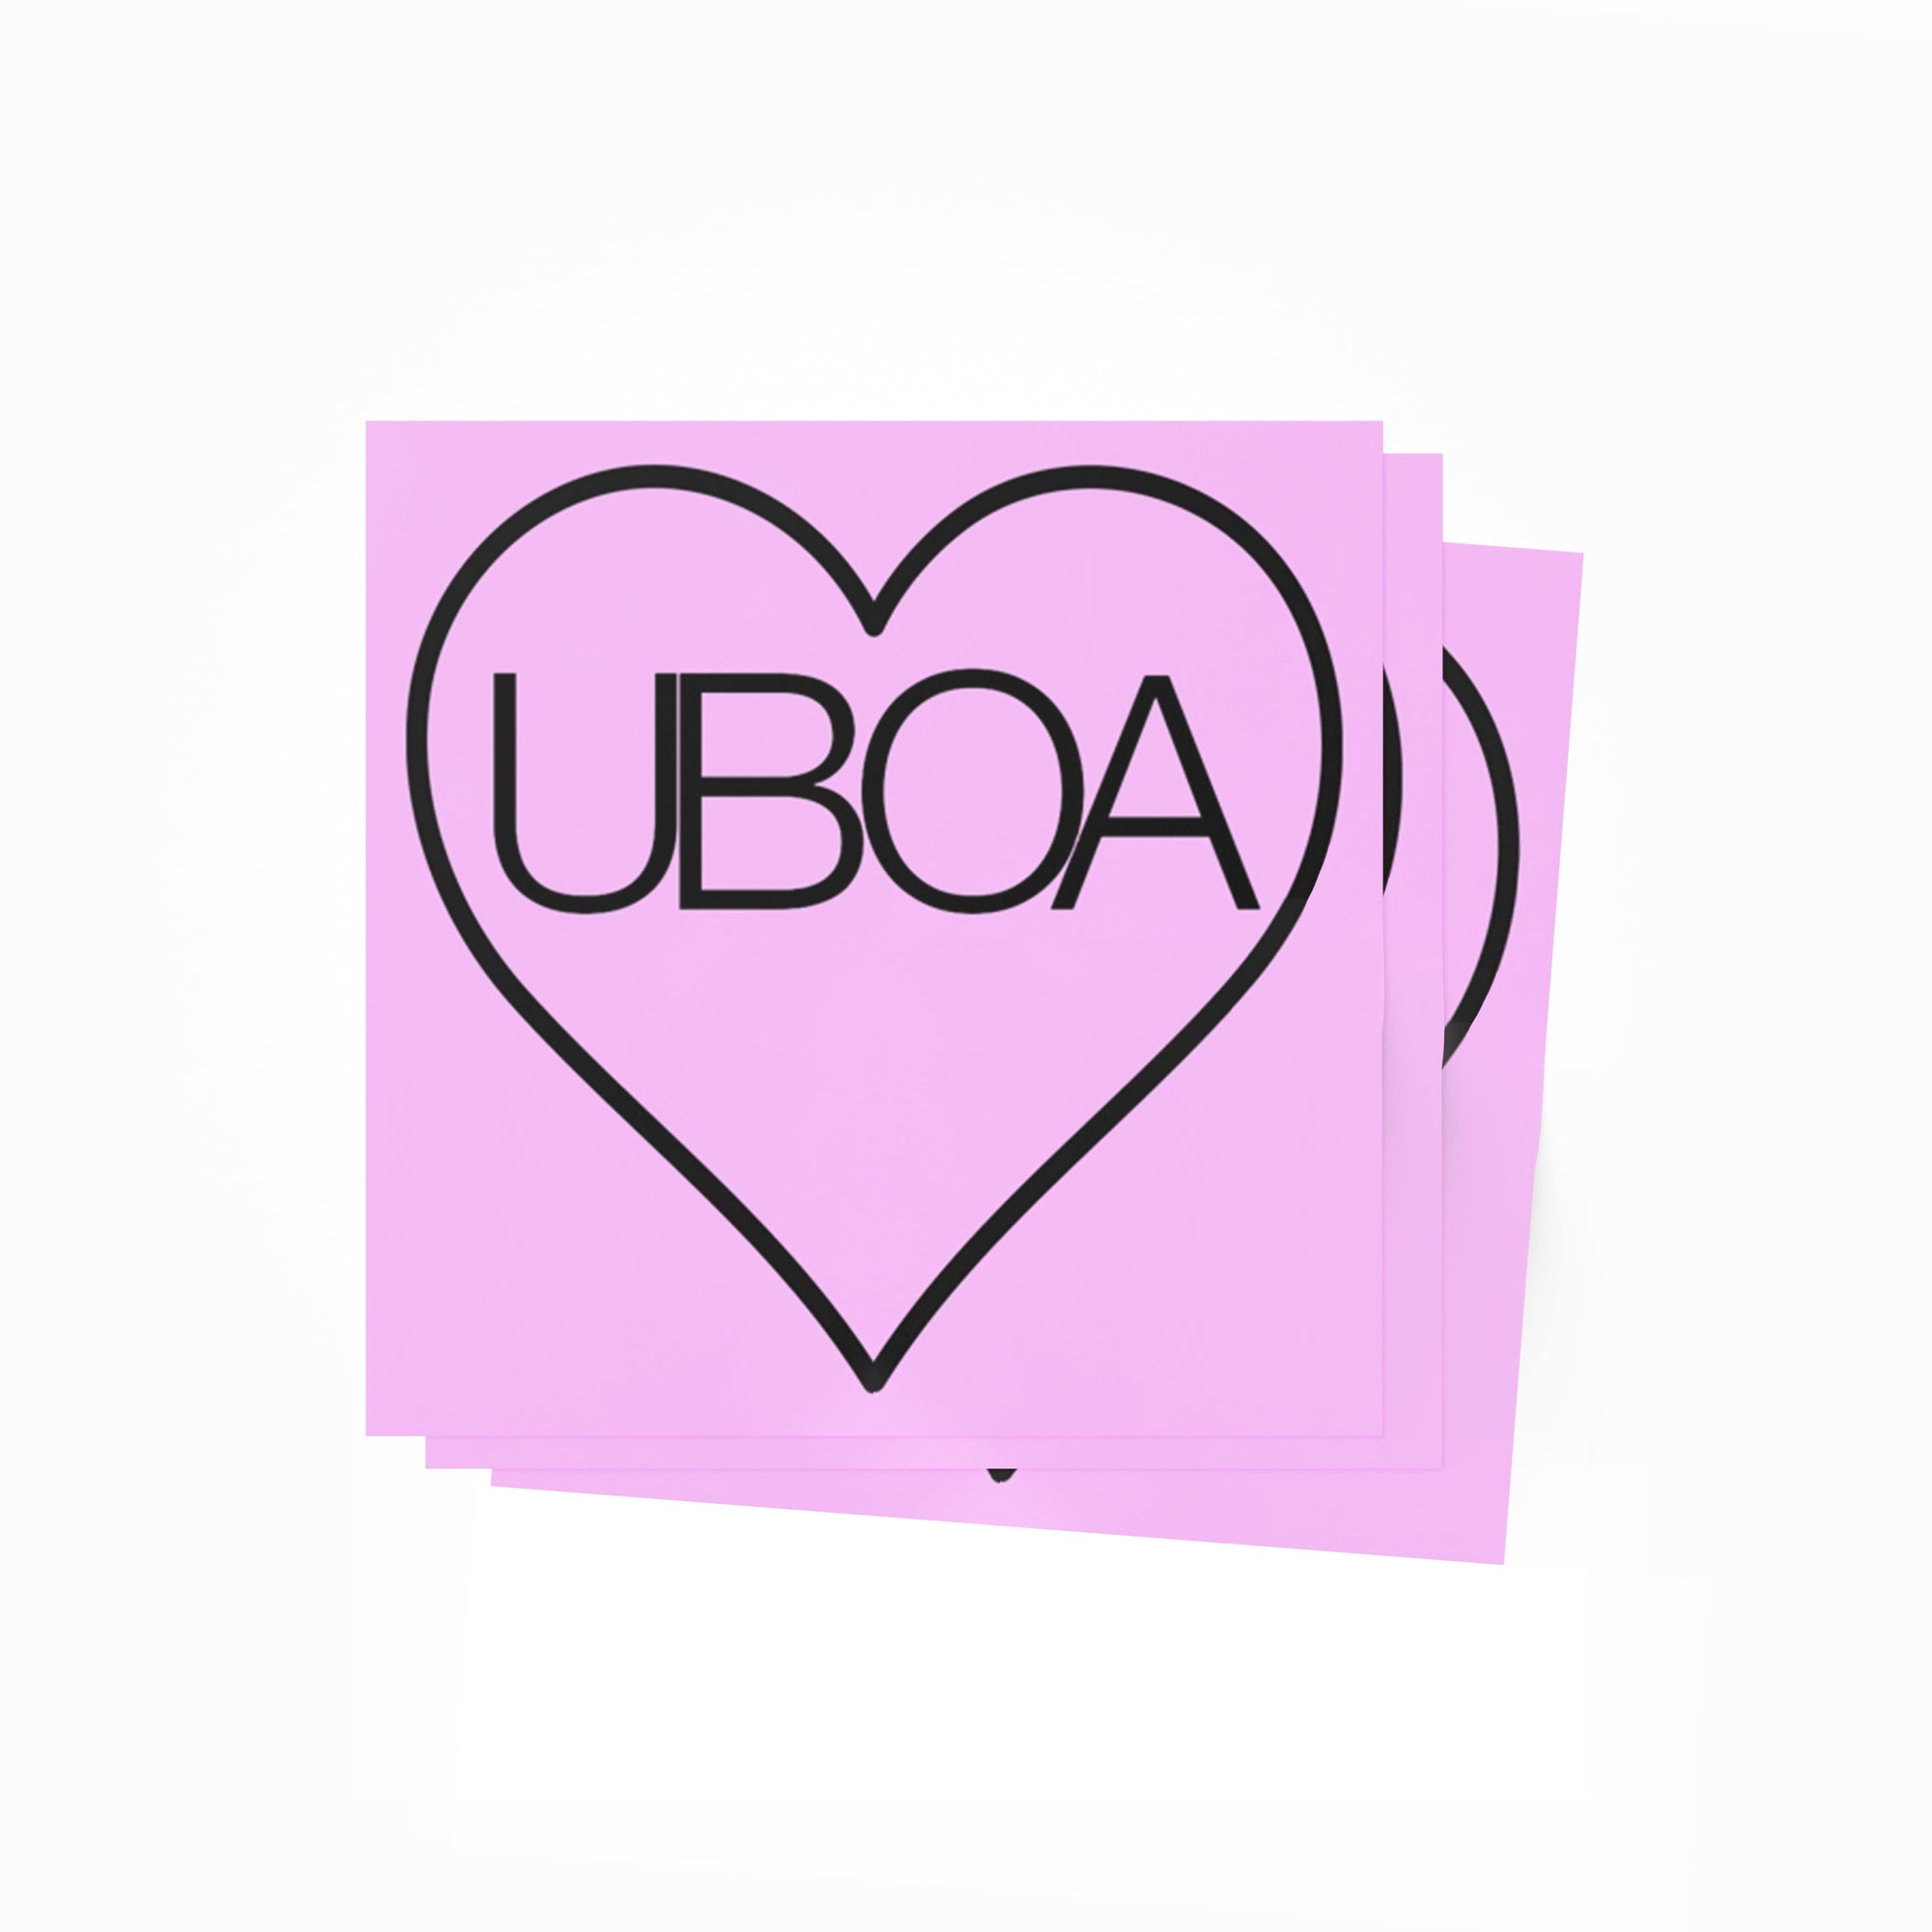 The Flenser Apparel Uboa "Heart" Sticker